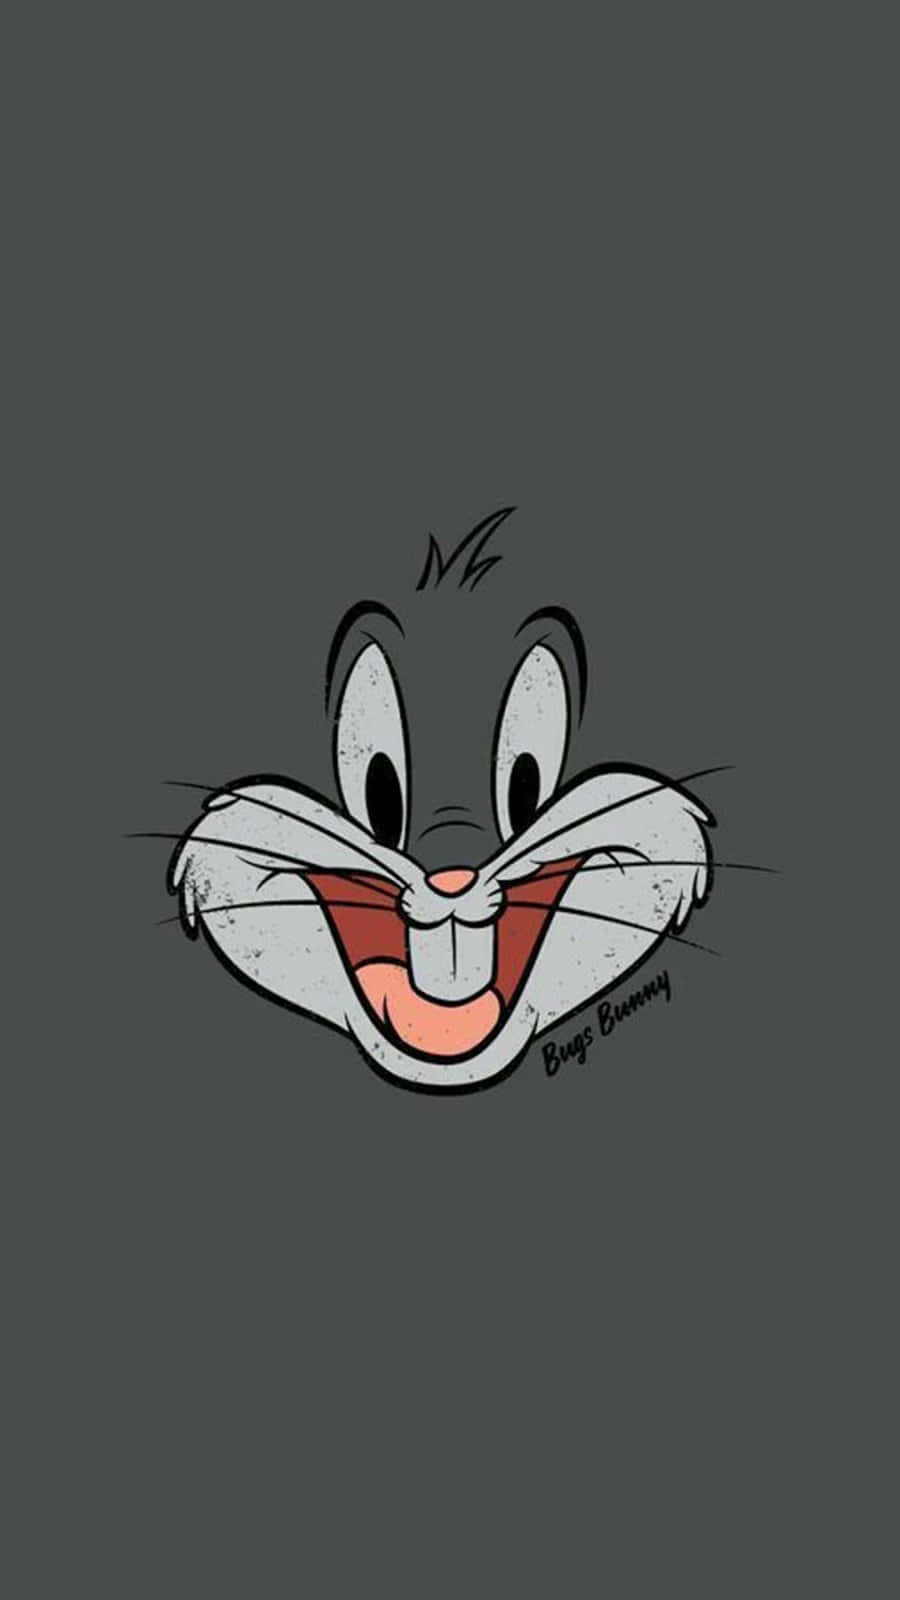 A Cartoon Rabbit With A Big Mouth Wallpaper